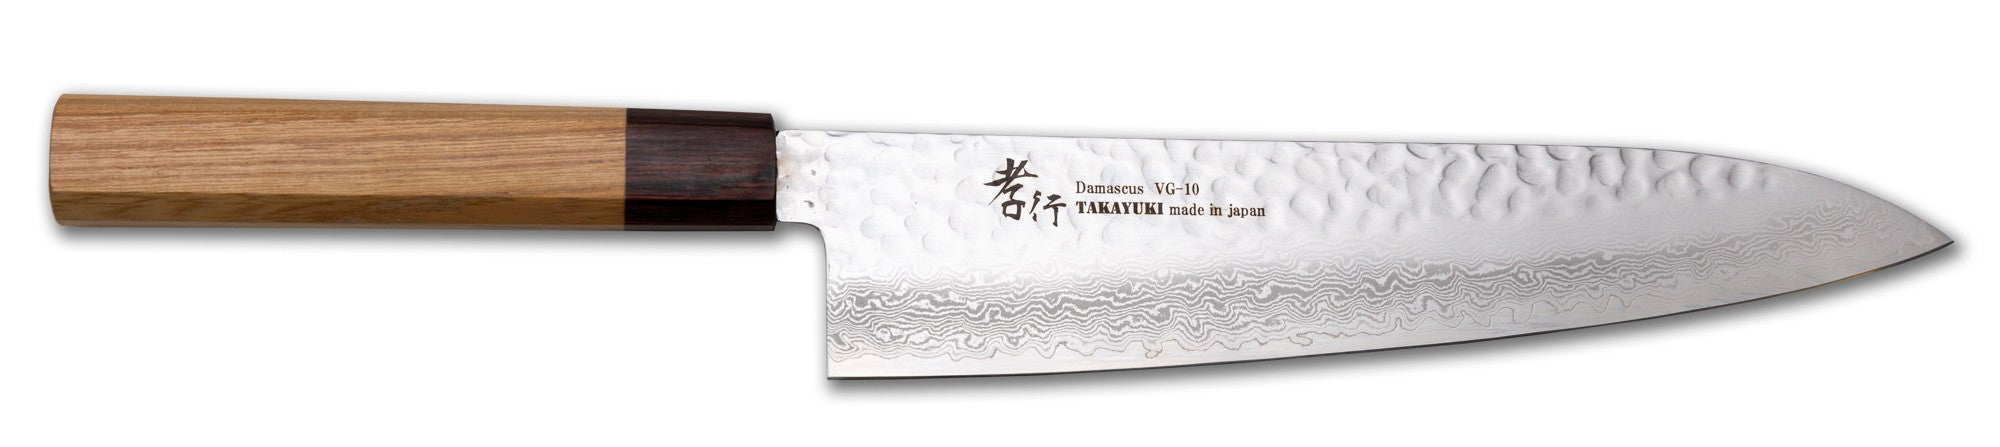 Couteau de chef Damas 33 couches Sakai Takayuki, manche Zelkova, 240 mm / 9,5"